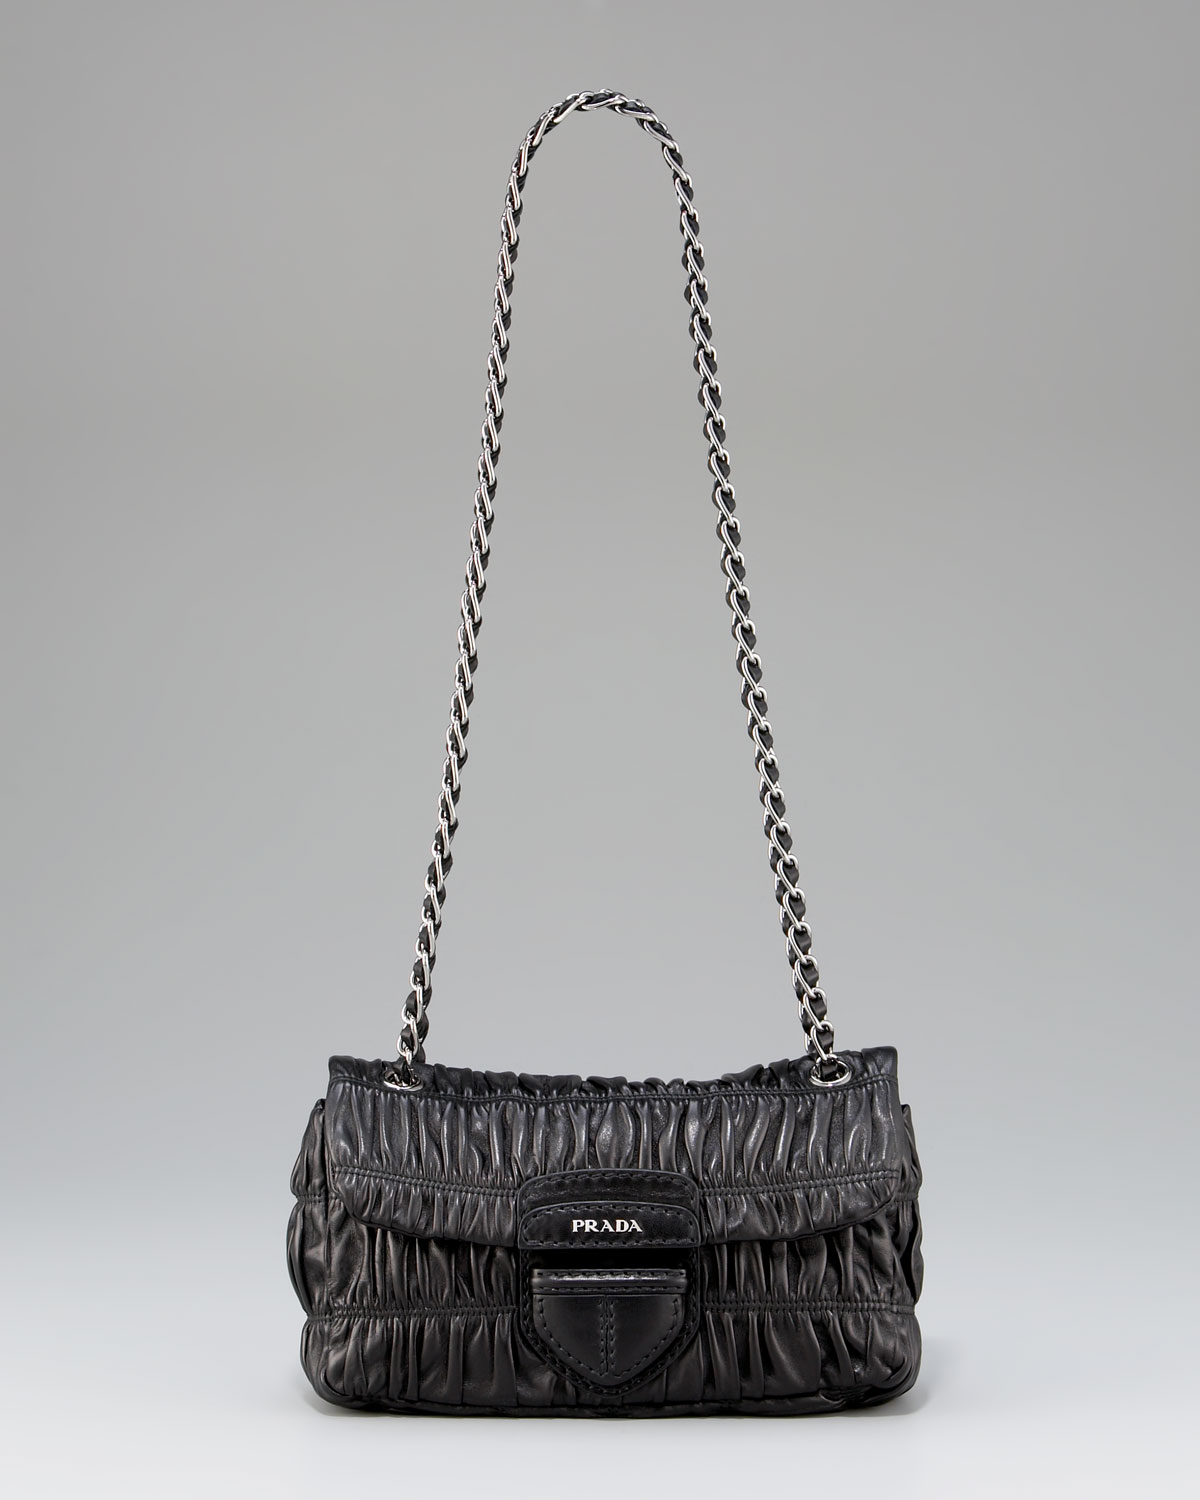 Lyst - Prada Medium Leather Chain-detail Shoulder Bag in Black